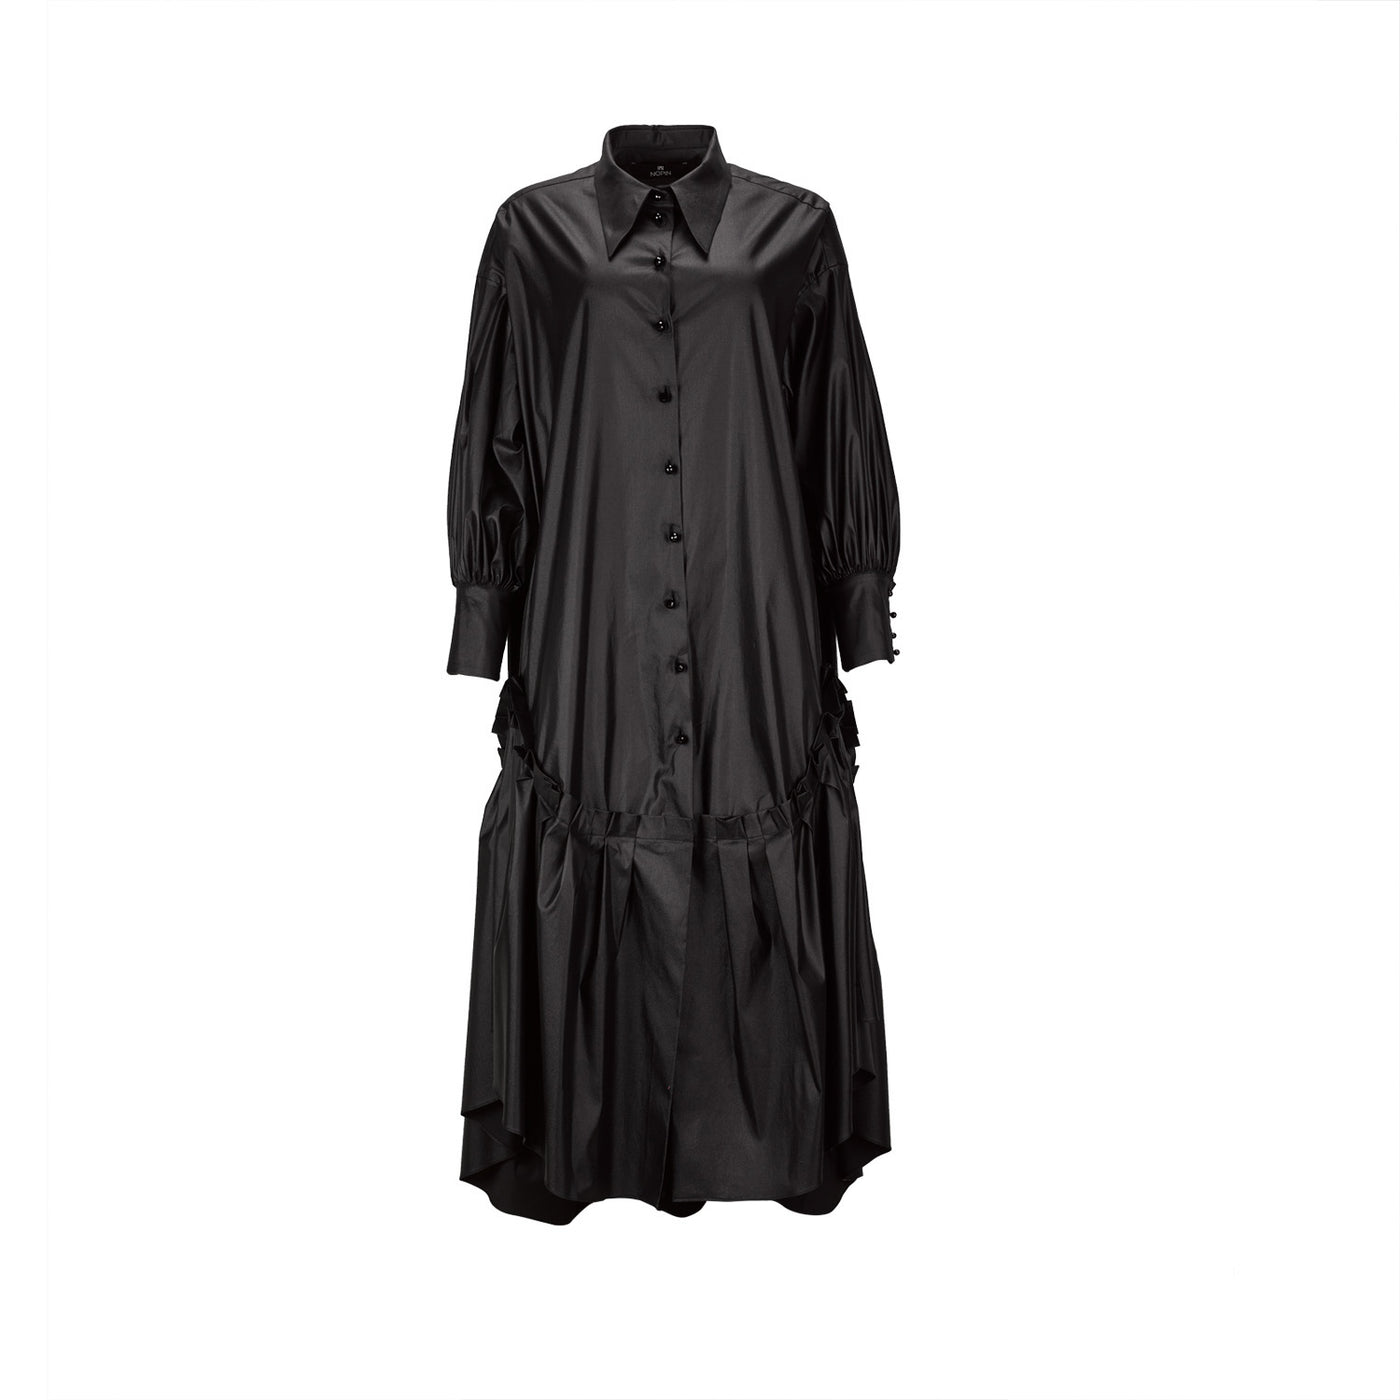 Black Oversized Shirt Dress with Frill